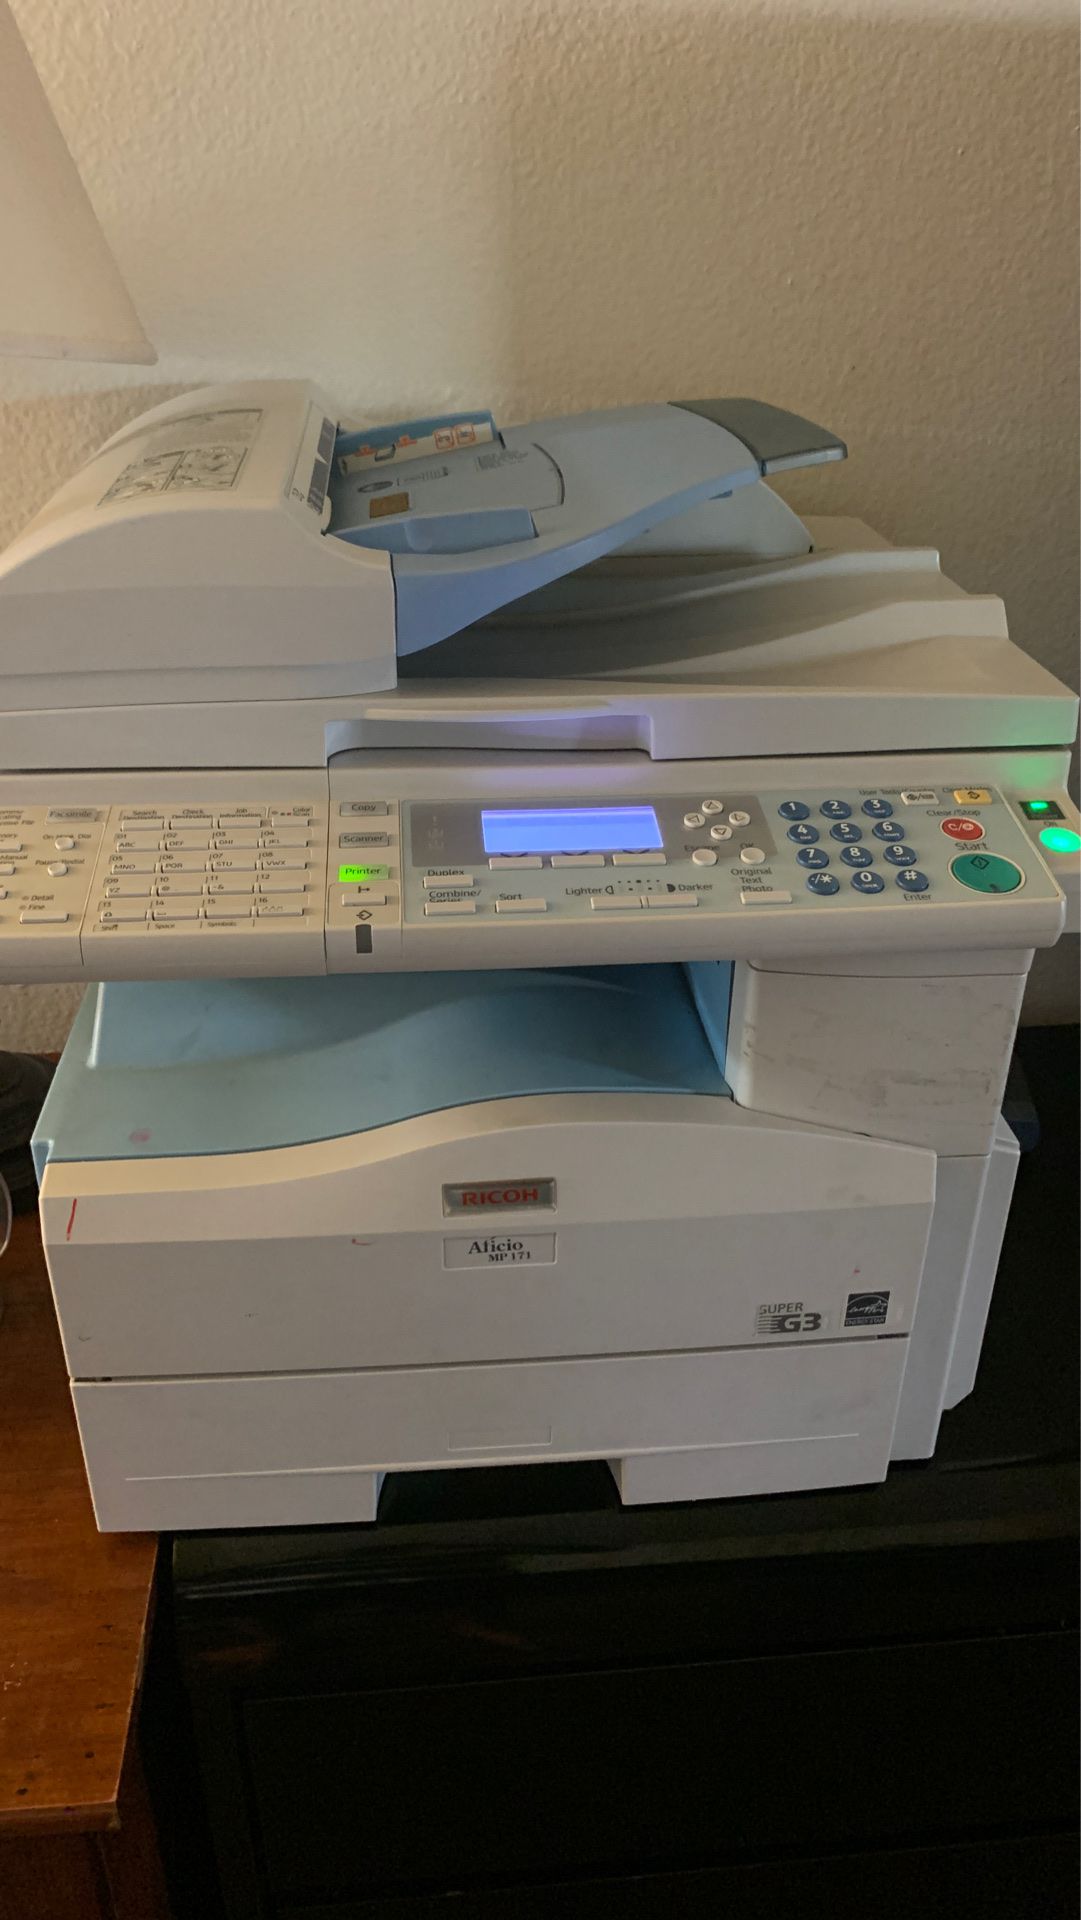 Ricoh printer with 3 free toners